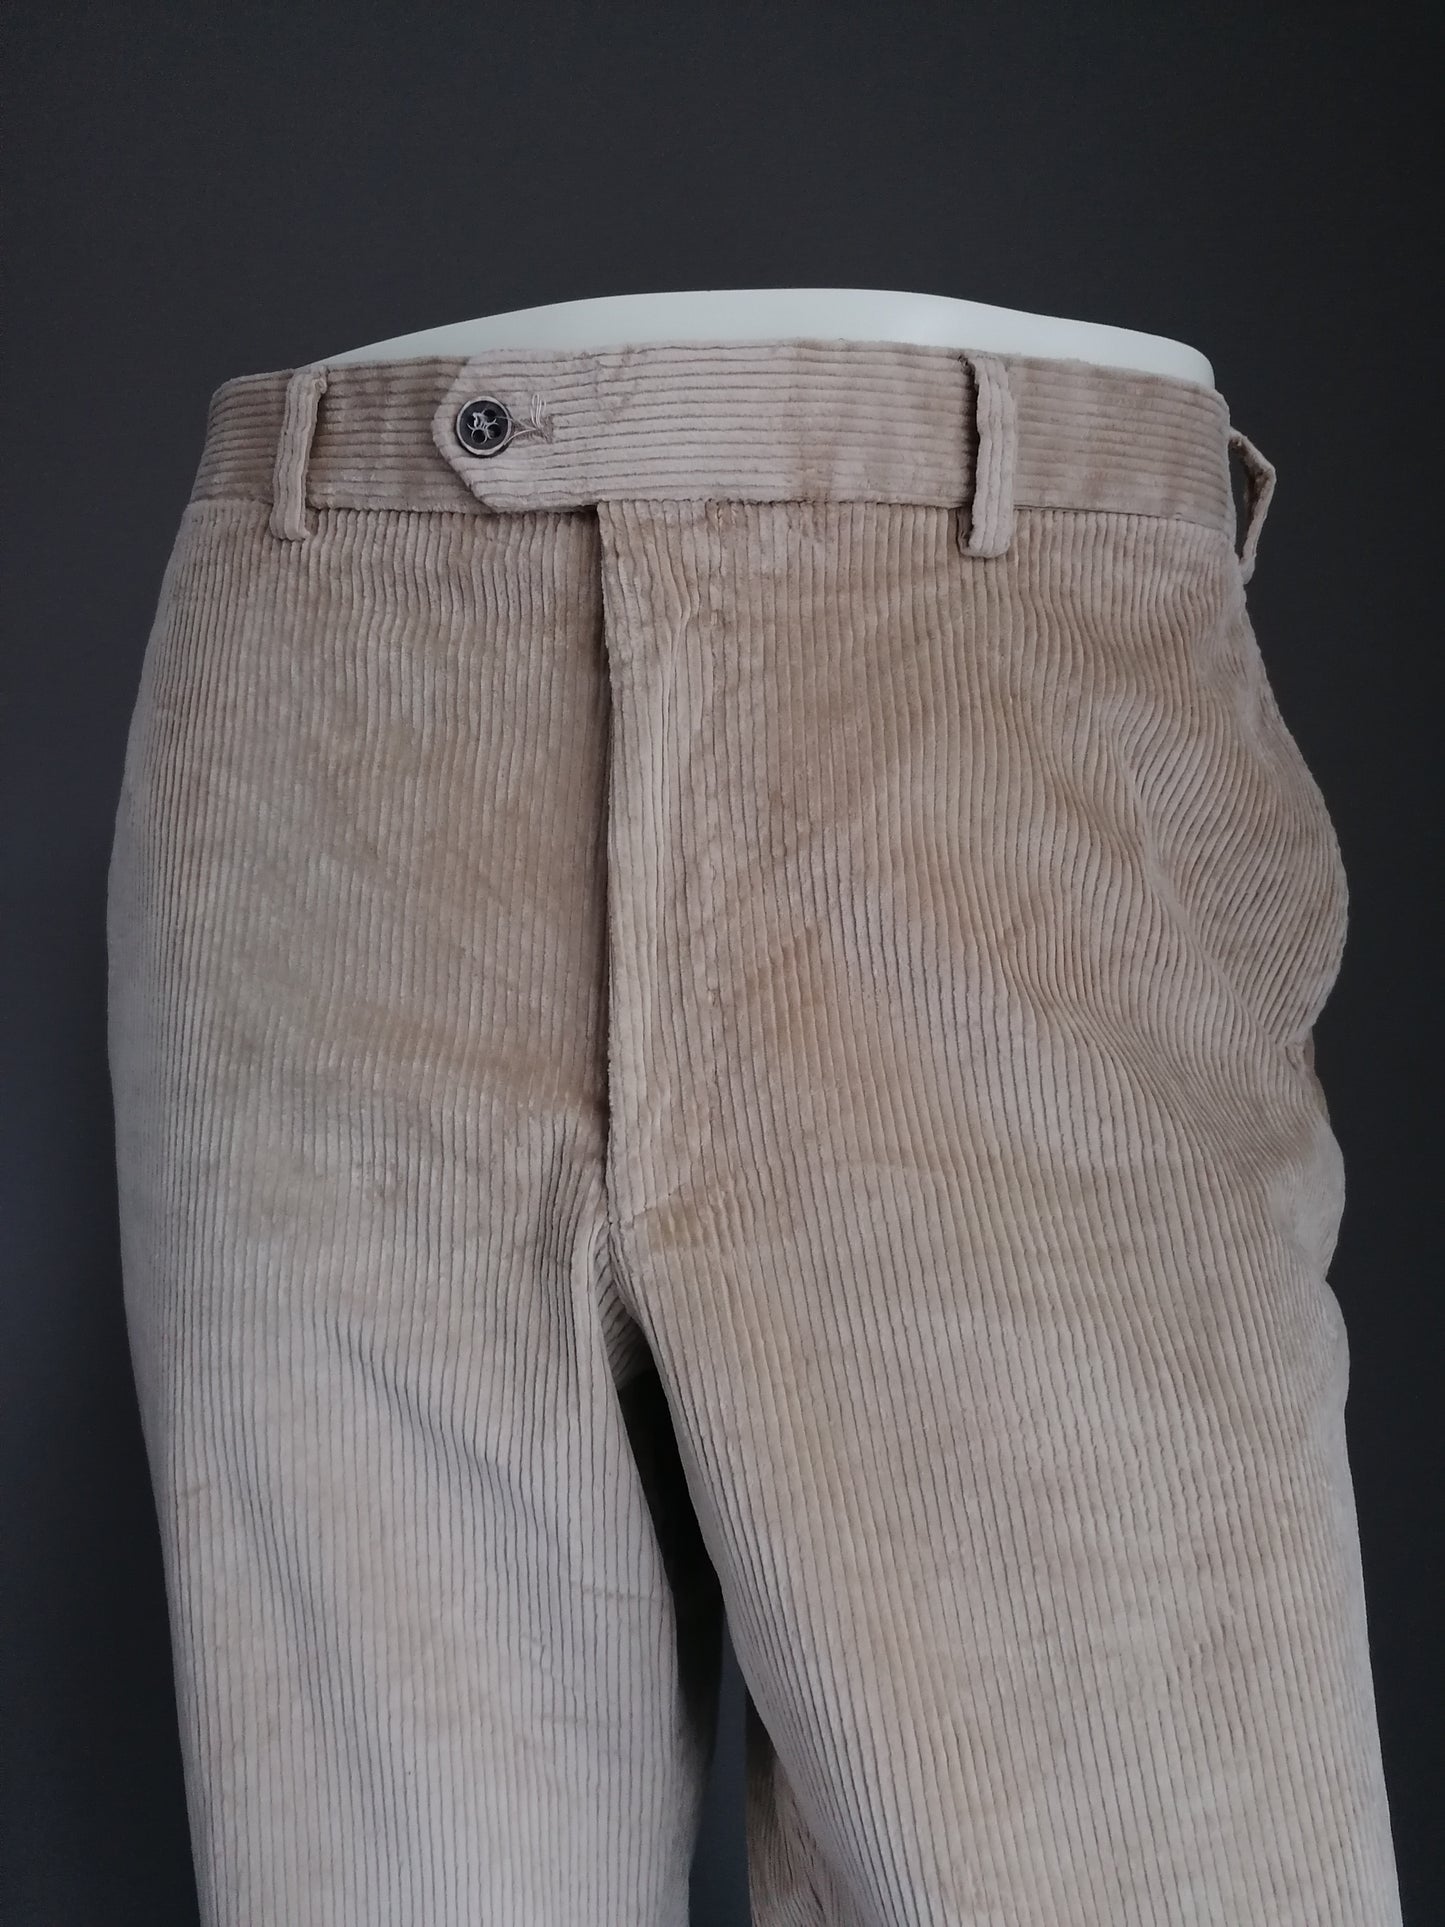 Hiltl rib pants / trousers. Light brown colored. Size 54 / L